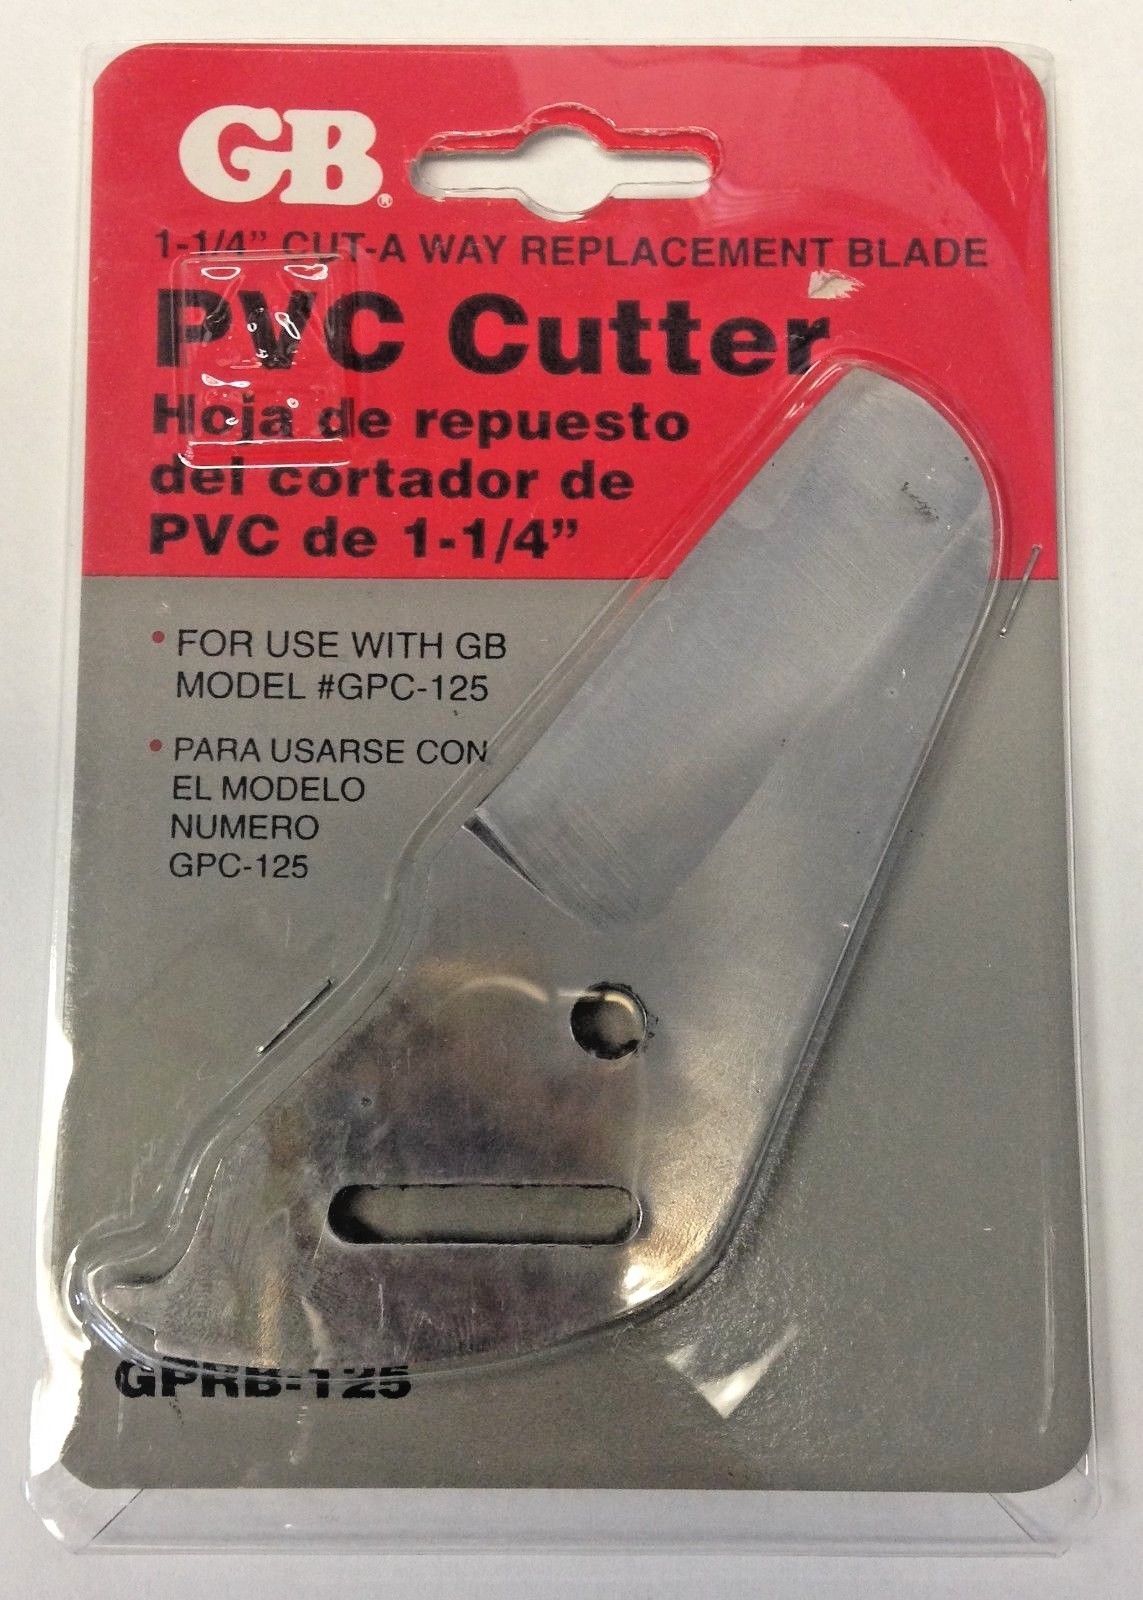 Gardner Bender GPRB-125 1-1/4" Cut-A Way PVC Cutter Replacement Blade